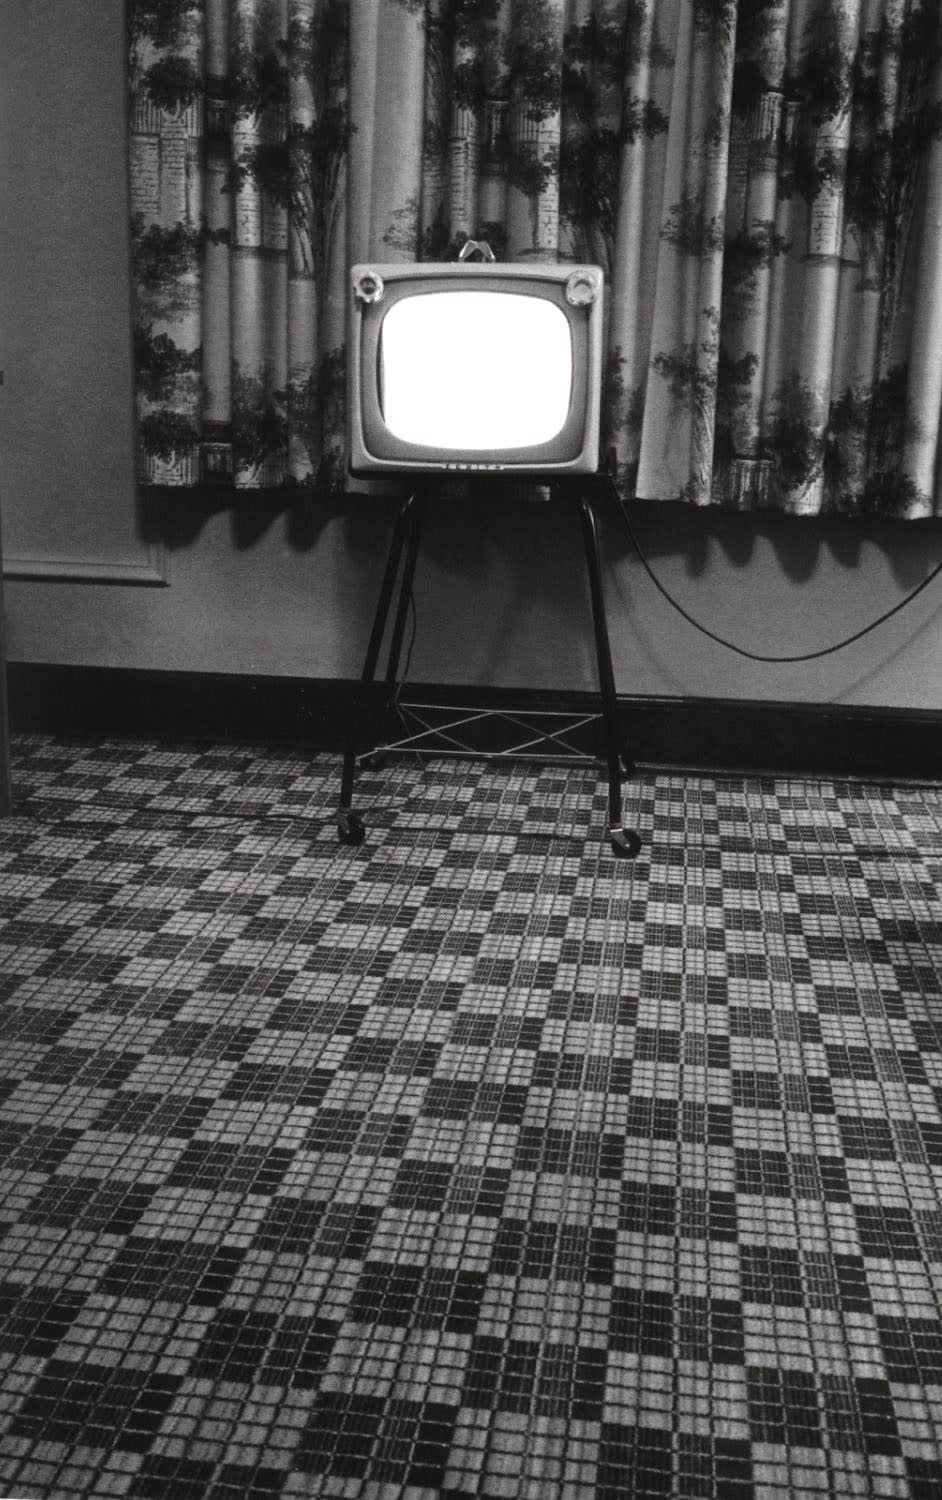 Elliott Erwitt, Motel room, Texas, 1962